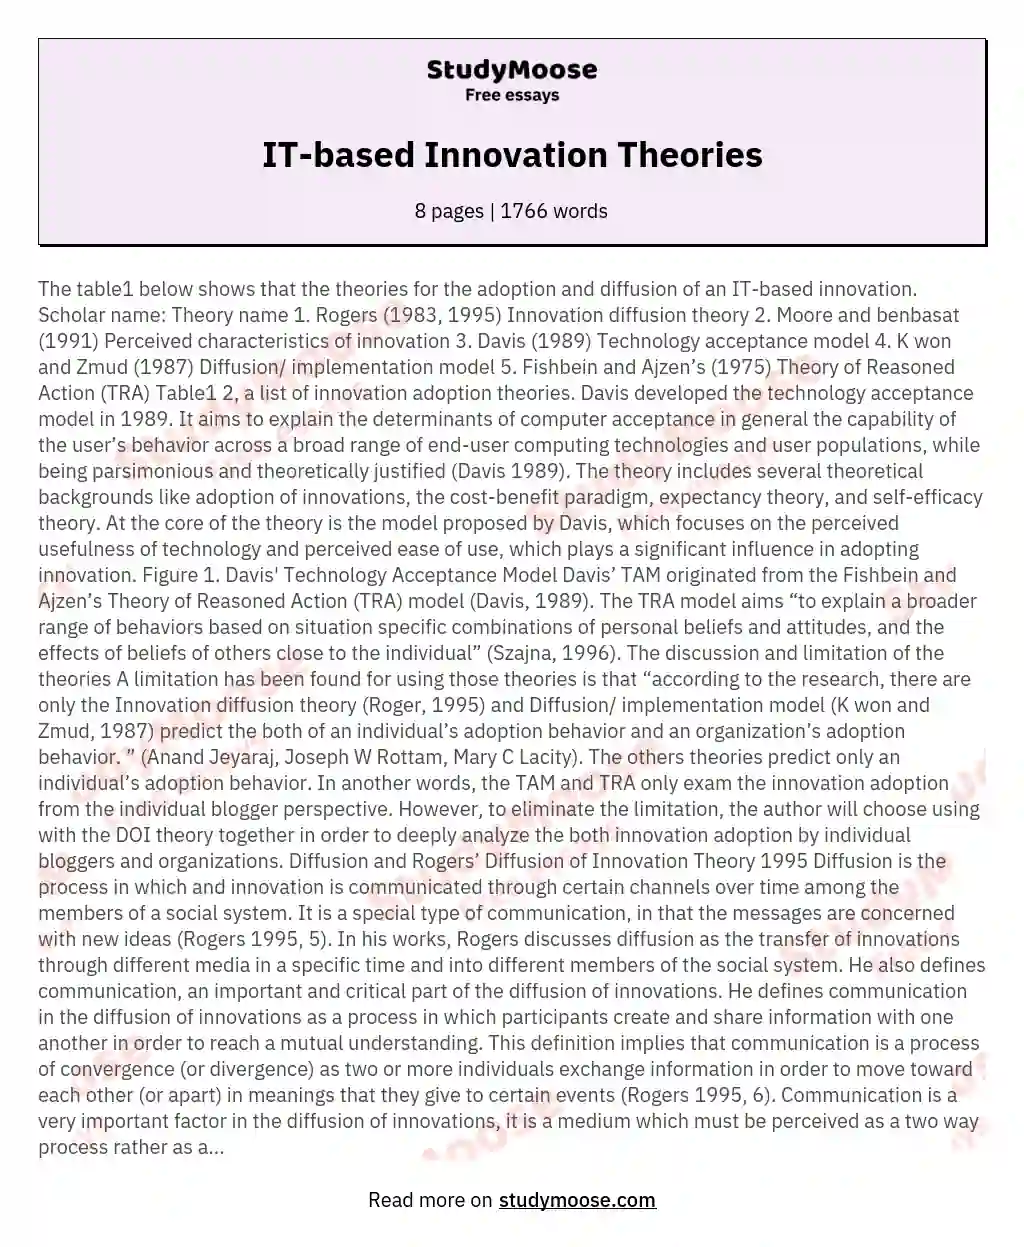 IT-based Innovation Theories essay